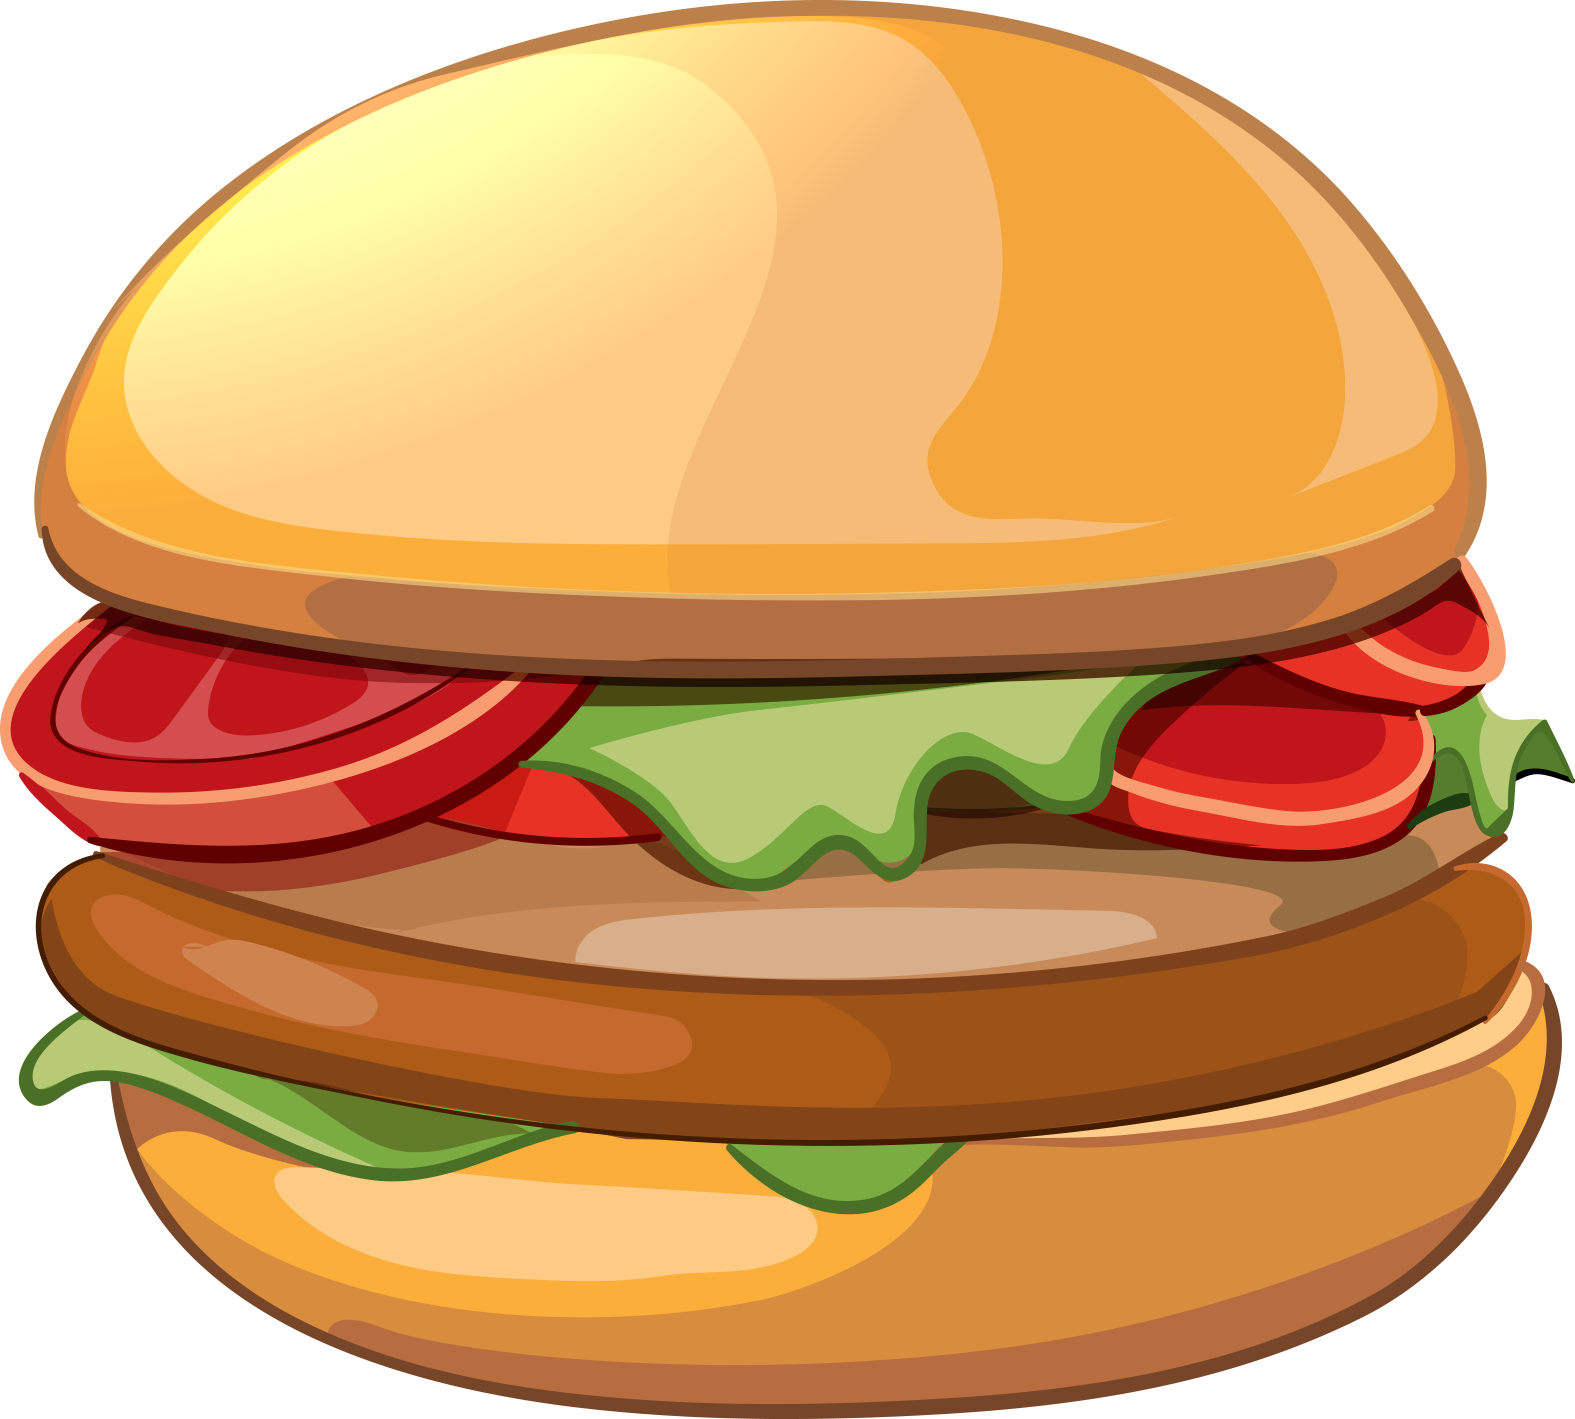 Cheeseburger Hamburger French fries Illustration Veggie burger ...